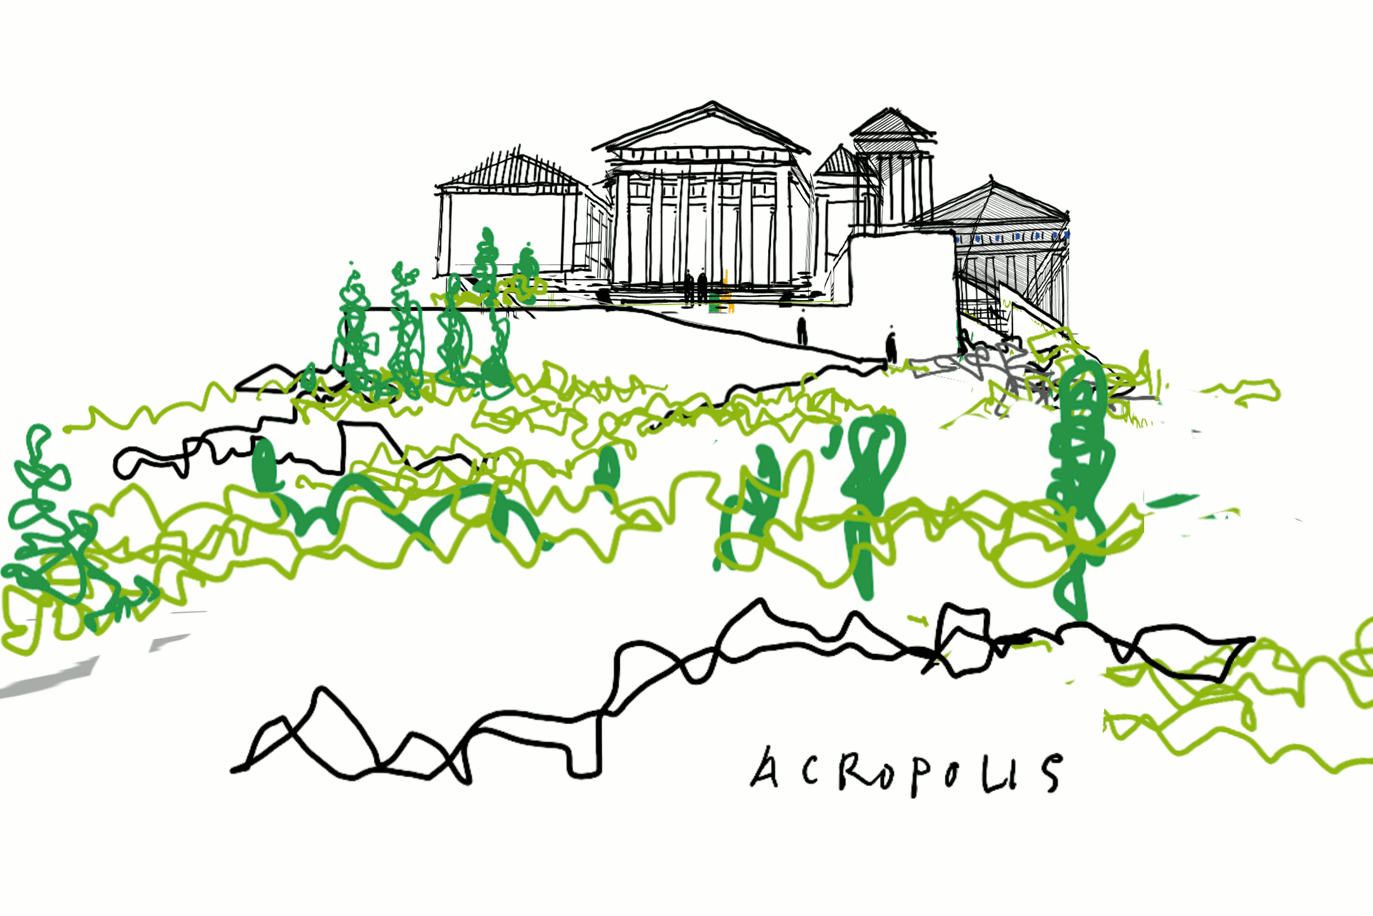 Acropolis Image.Go online to download.